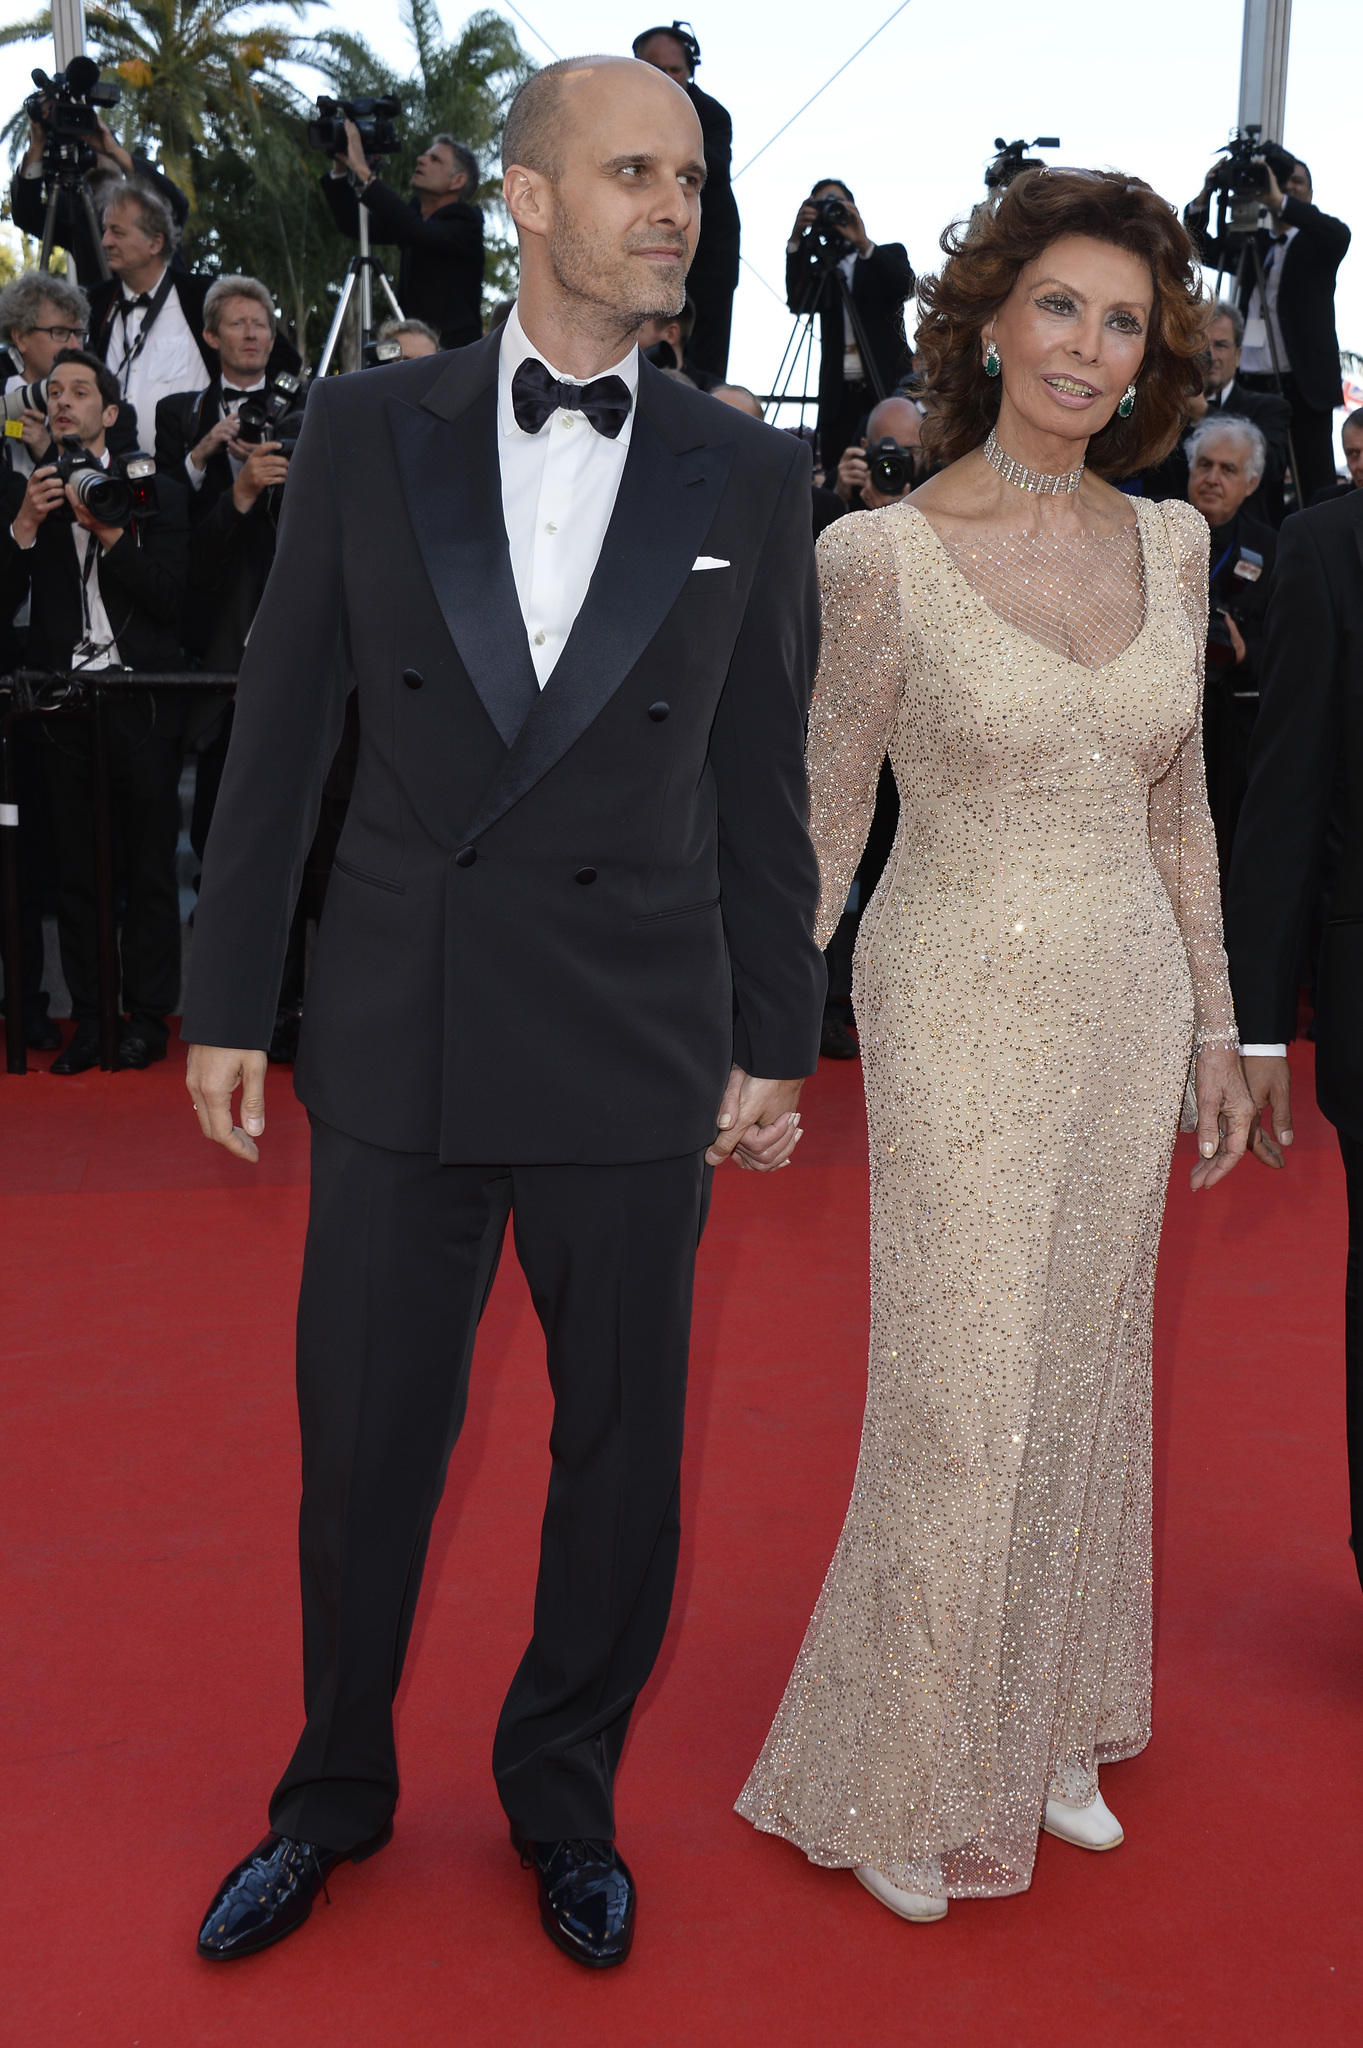 Sophia Loren and son, director Edoardo Pont attend the 